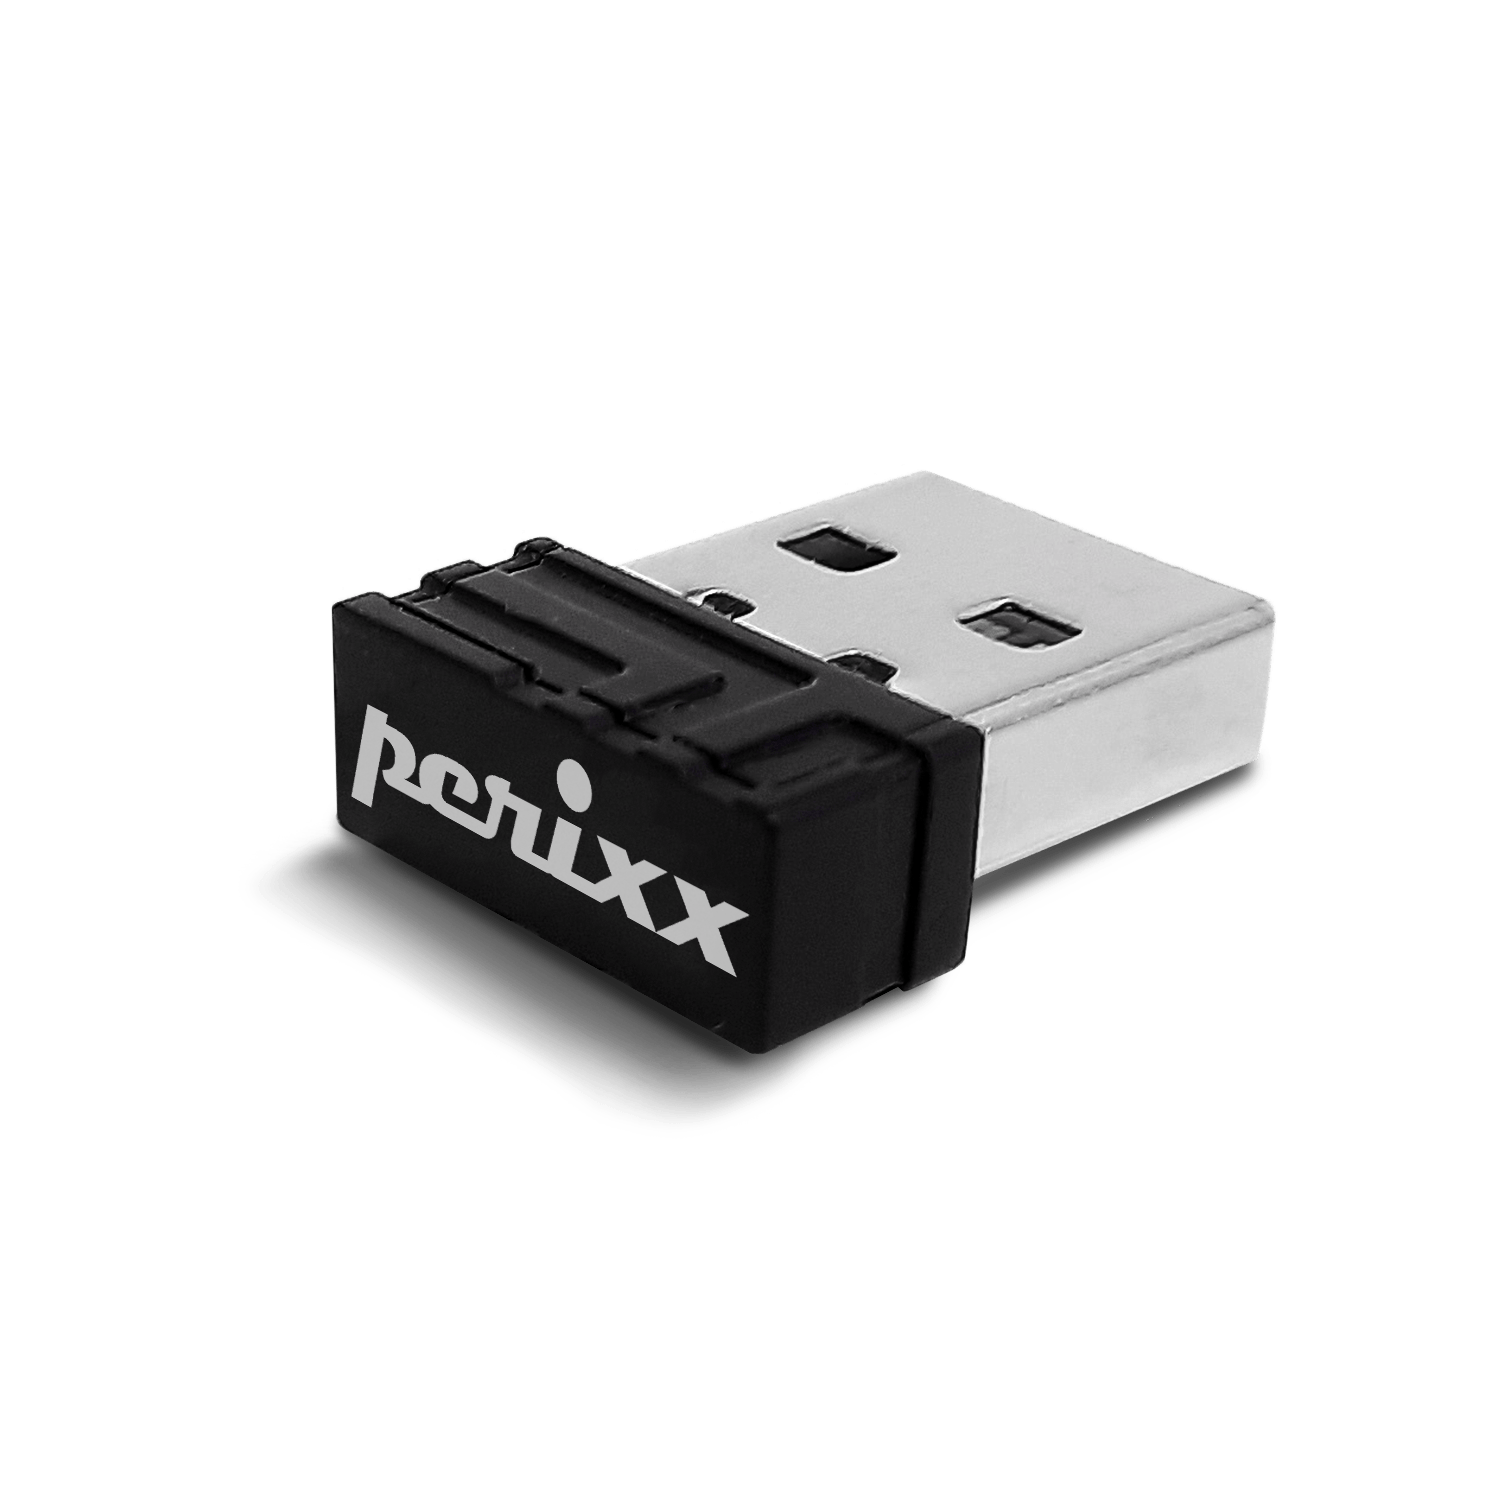 USB dongle receiver for PERIPAD-704 - Perixx Europe